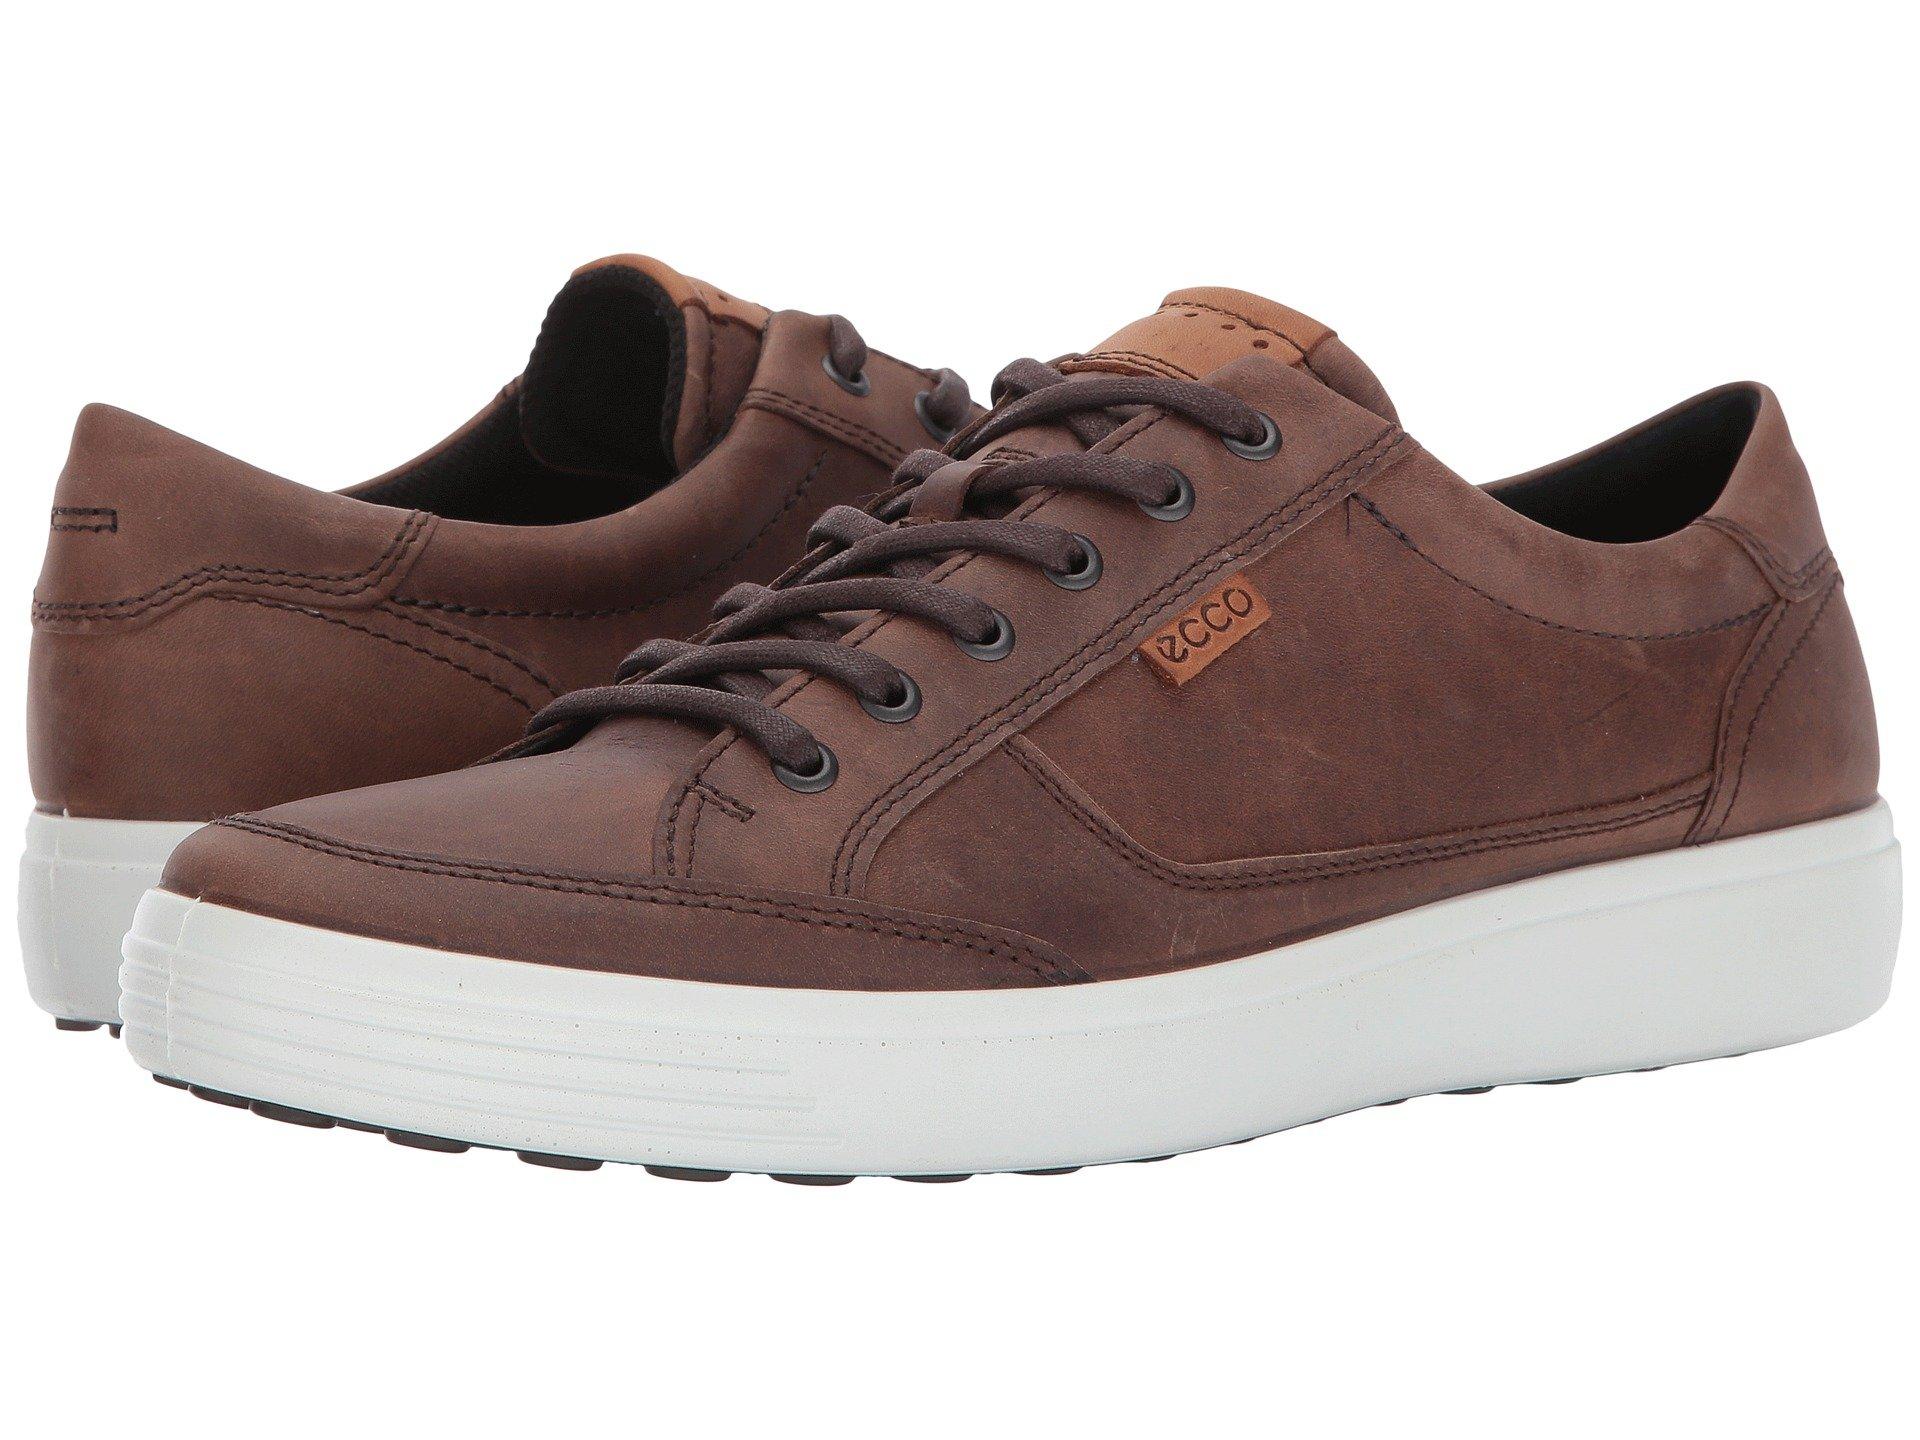 Ecco Leather Soft Retro Sneaker in Brown for Men - Lyst